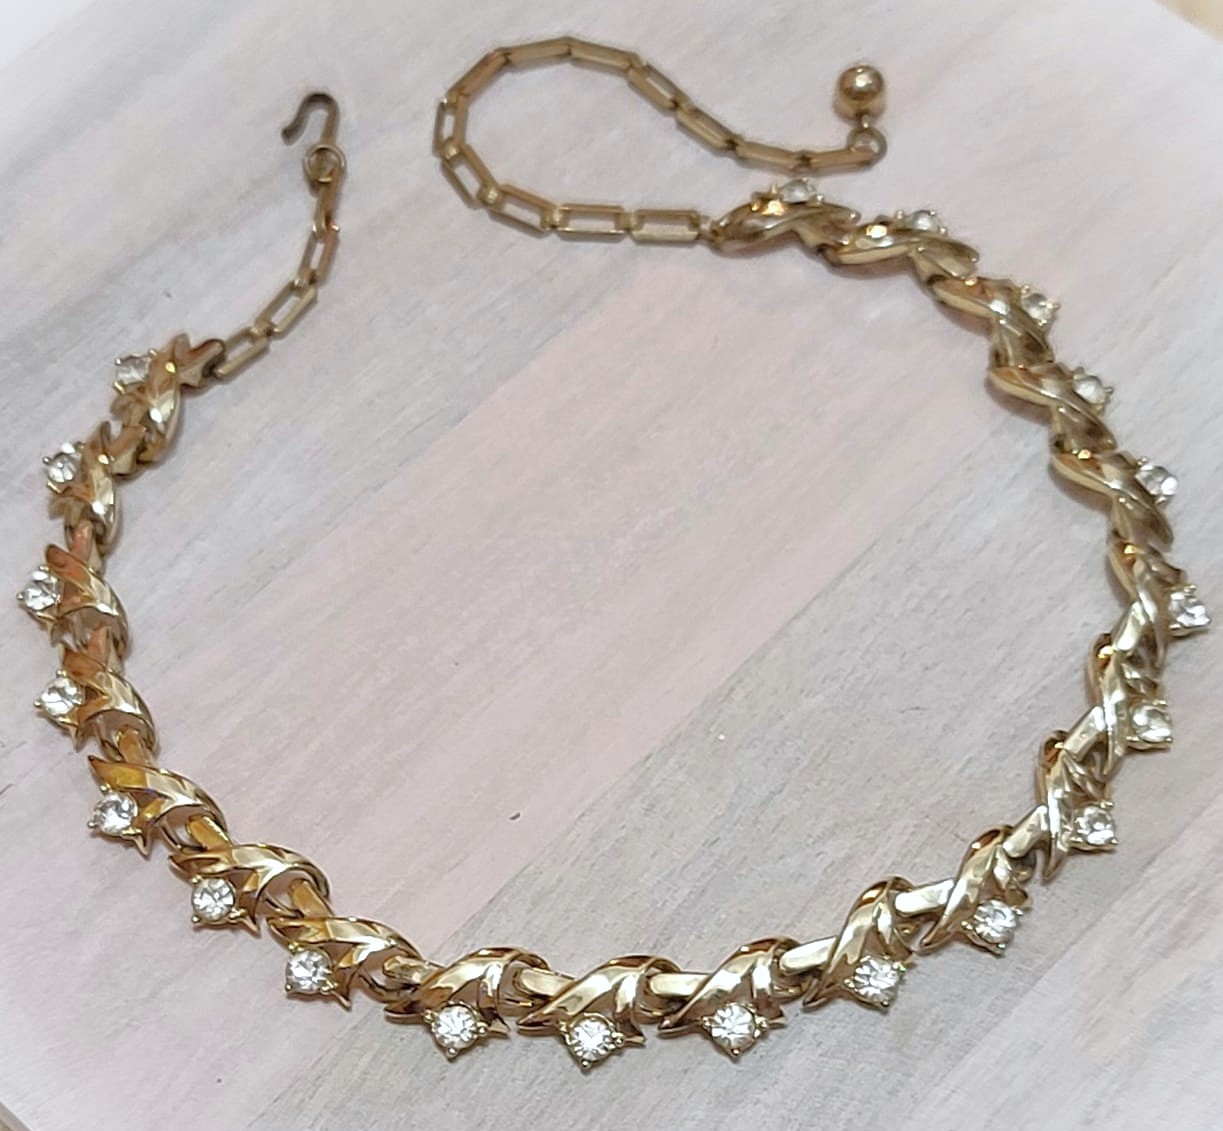 Goldtone and rhinestone vintage choker necklace